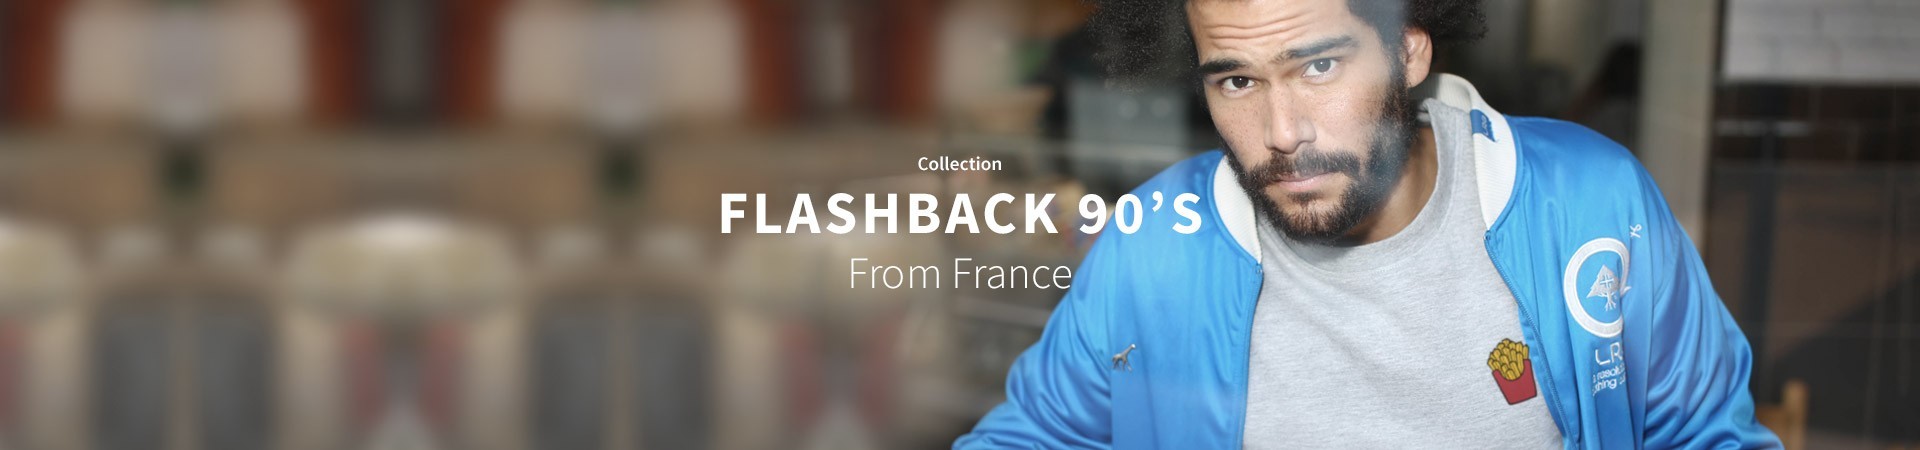 Flashback 90's